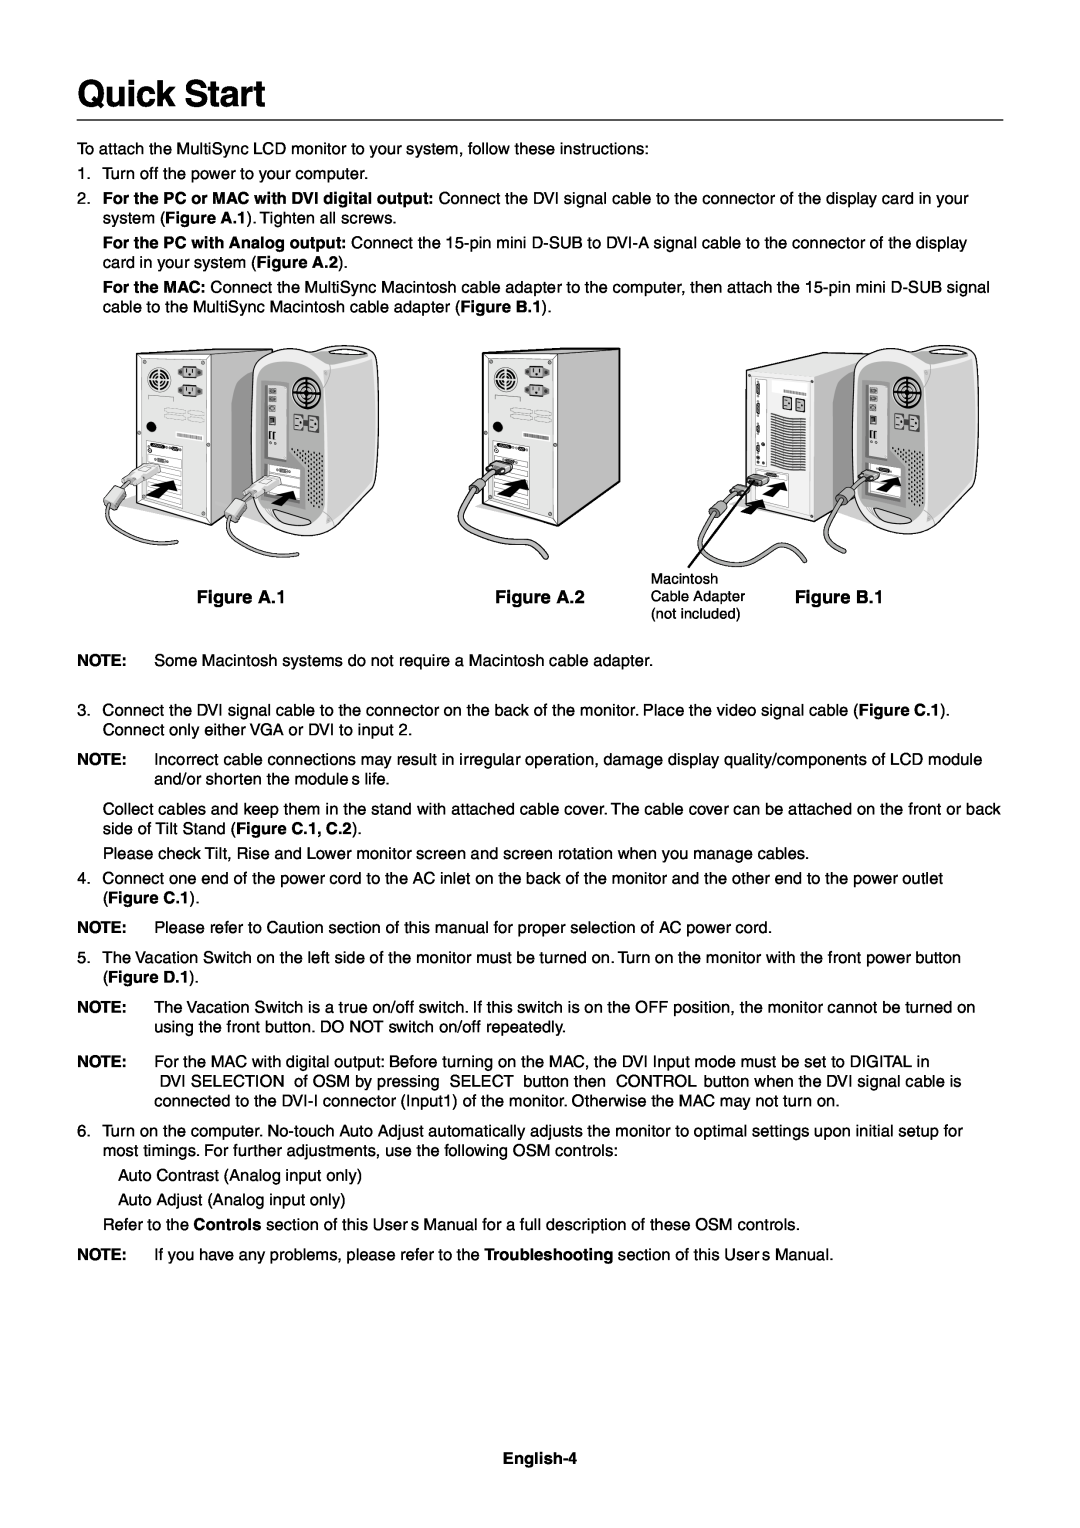 NEC 1980FXi user manual Quick Start, Figure A.1, Figure A.2, English-4 